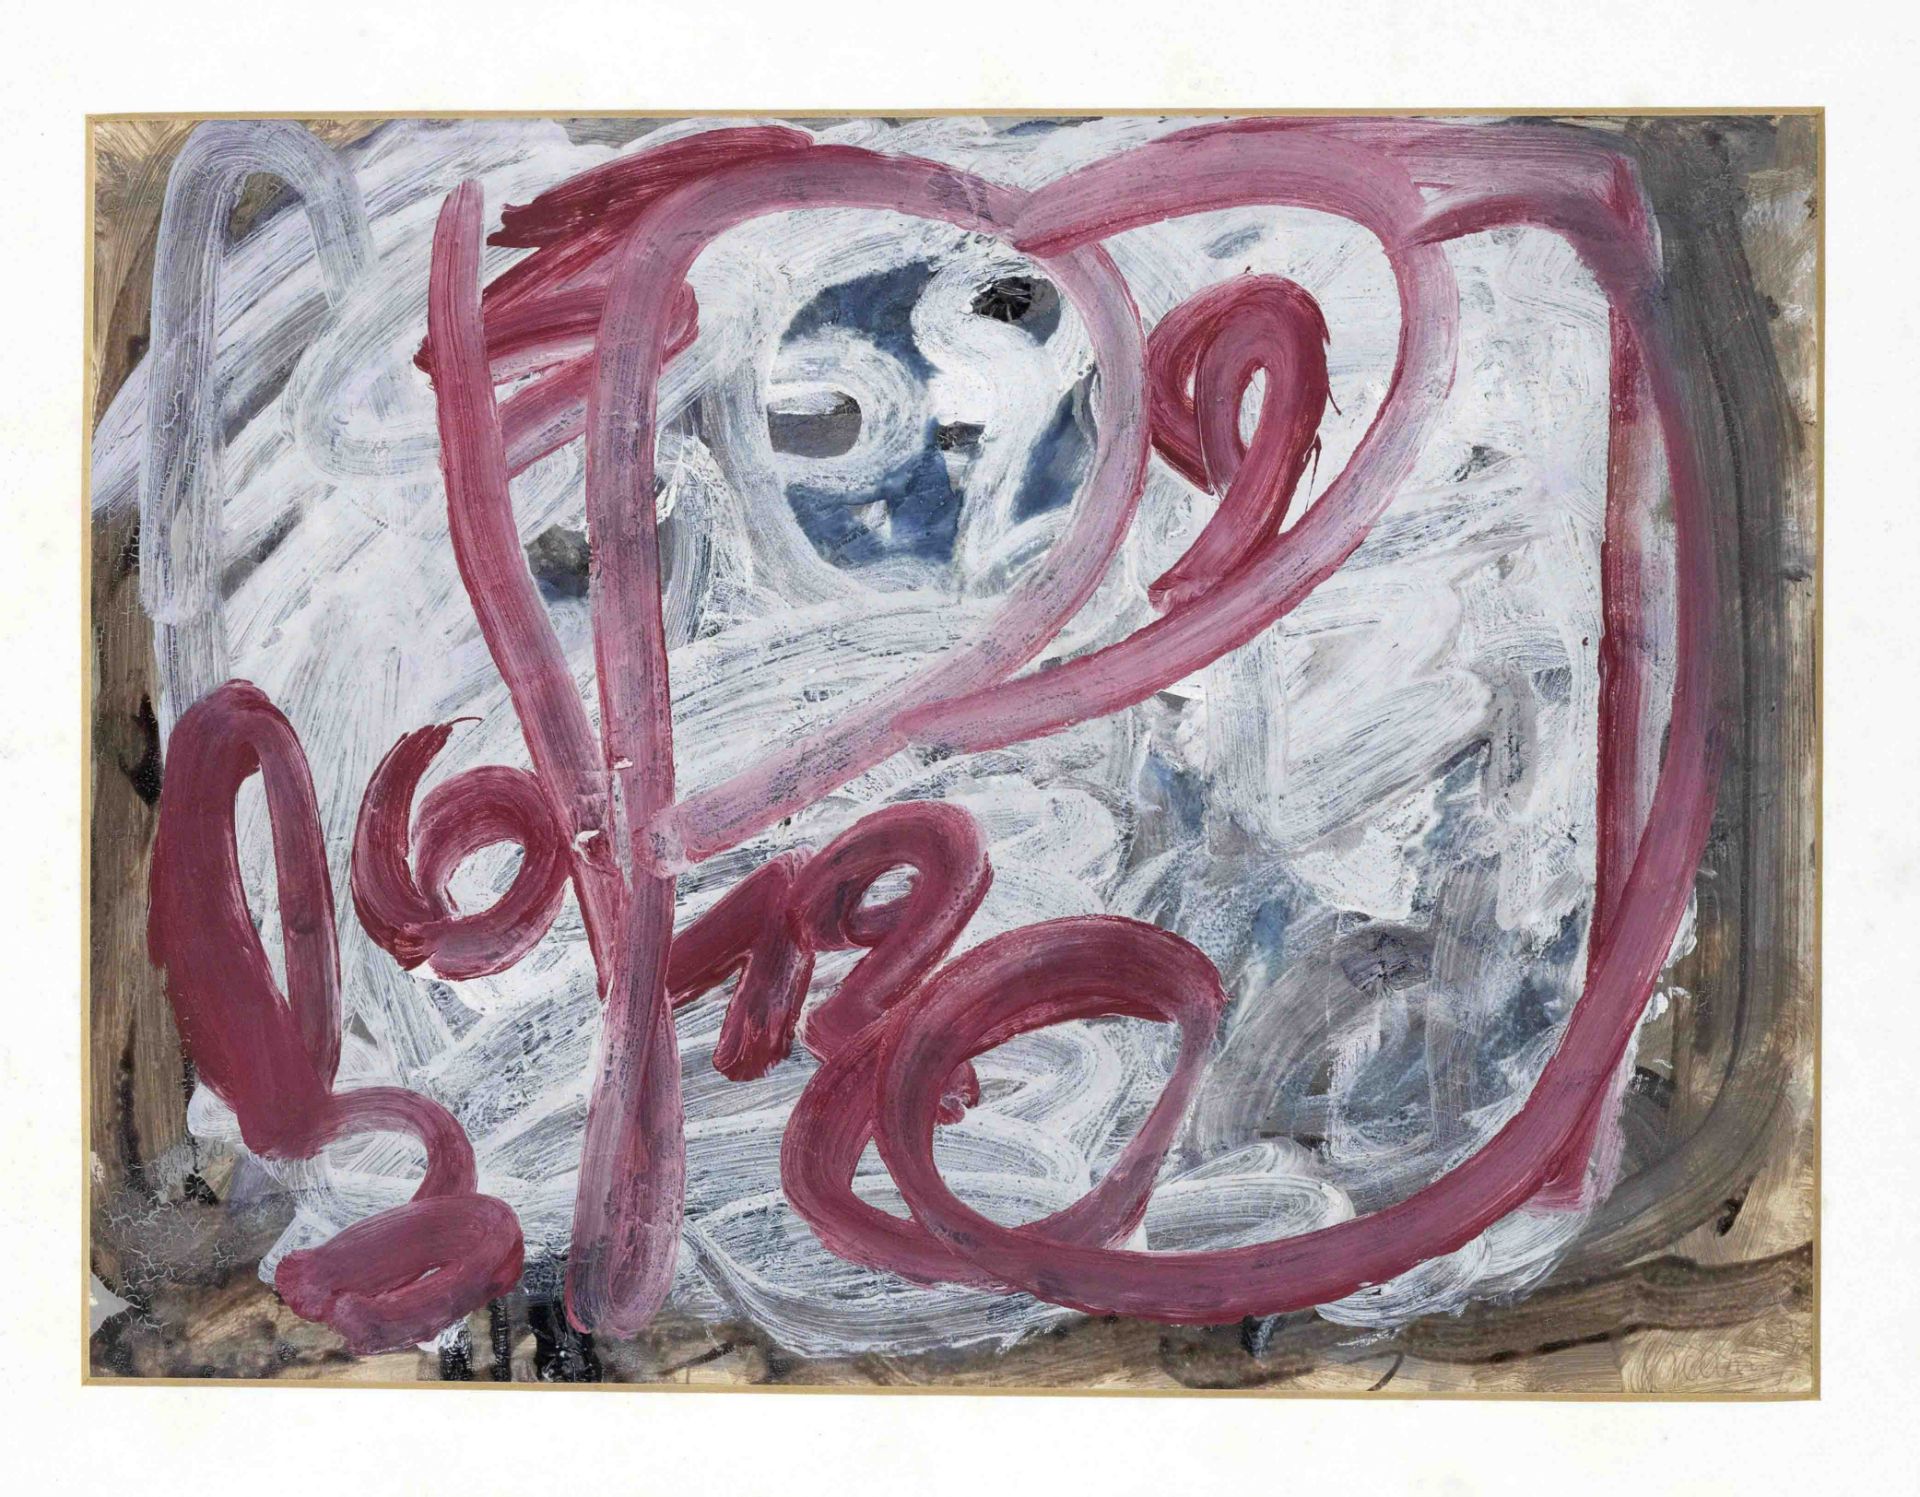 Günter Tollmann (1926-1990), studied in Düsseldorf, university teacher in Italy and Bremen, abstract